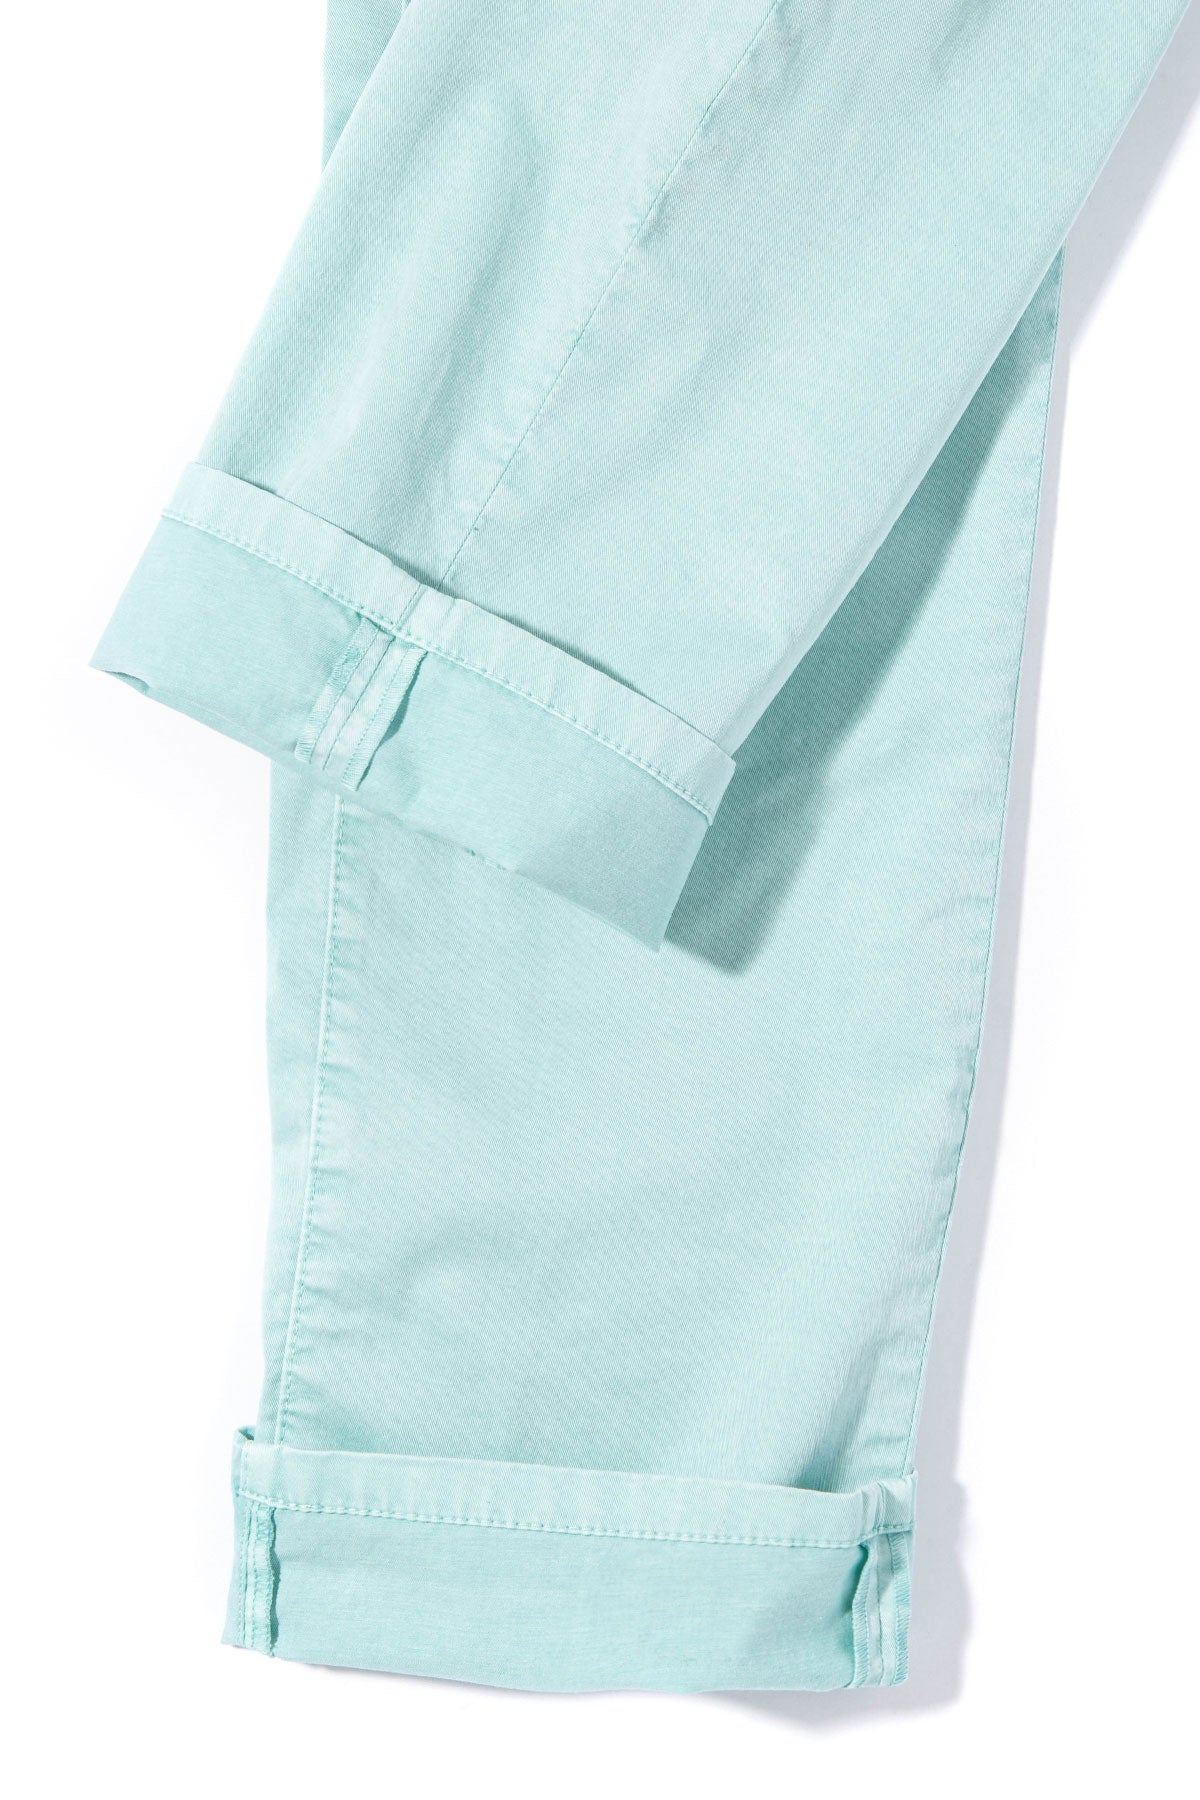 Flagstaff Stretch Cotton Twill in Spearmint | Mens - Pants - 5 Pocket | Axels Premium Denim